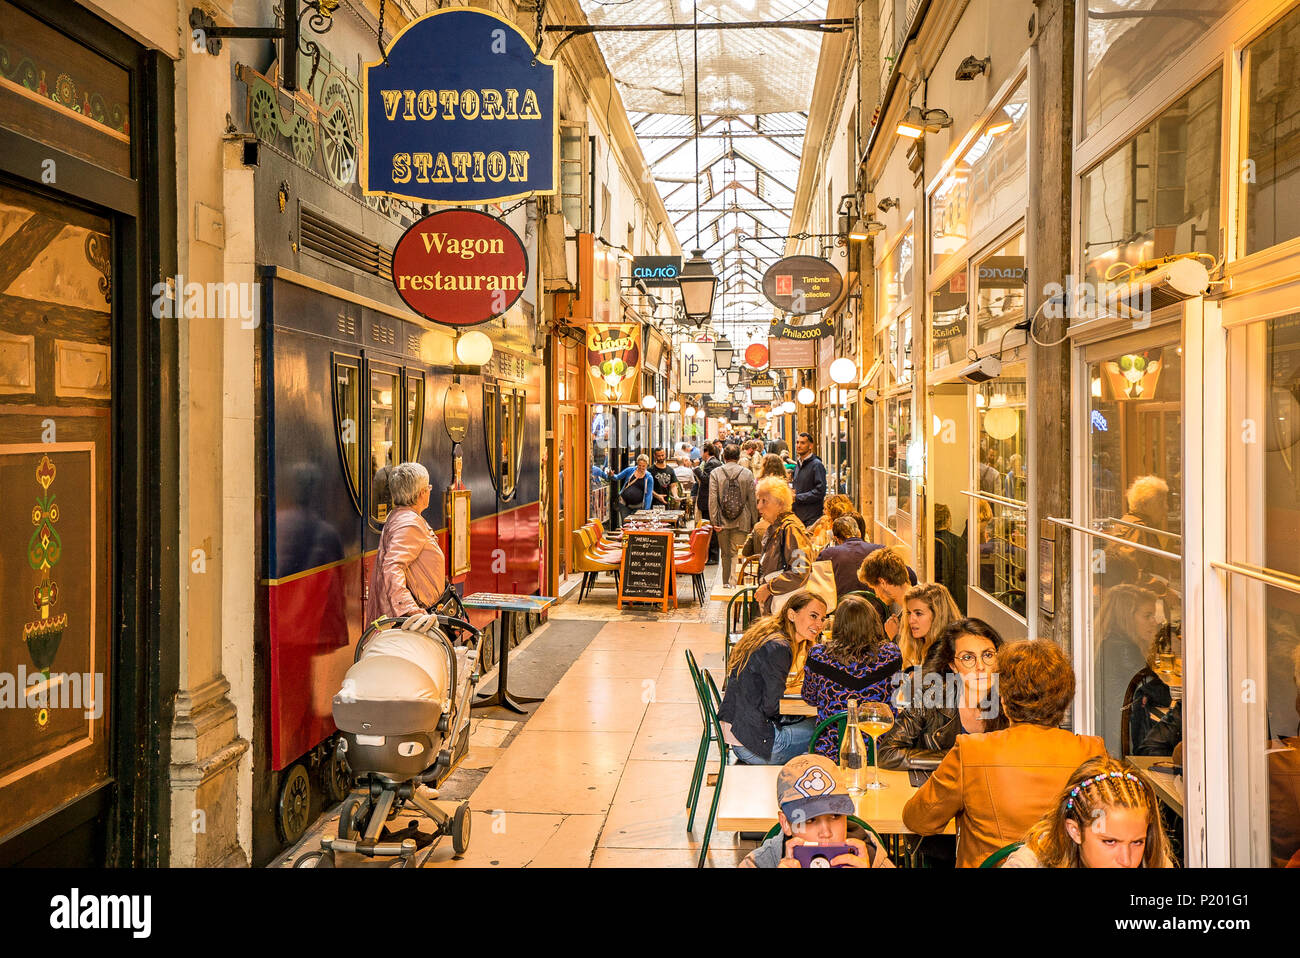 Victoria Station restaurant inside the Passage des Panoramas, one of Paris' famous Covered Passages. Paris, France Stock Photo